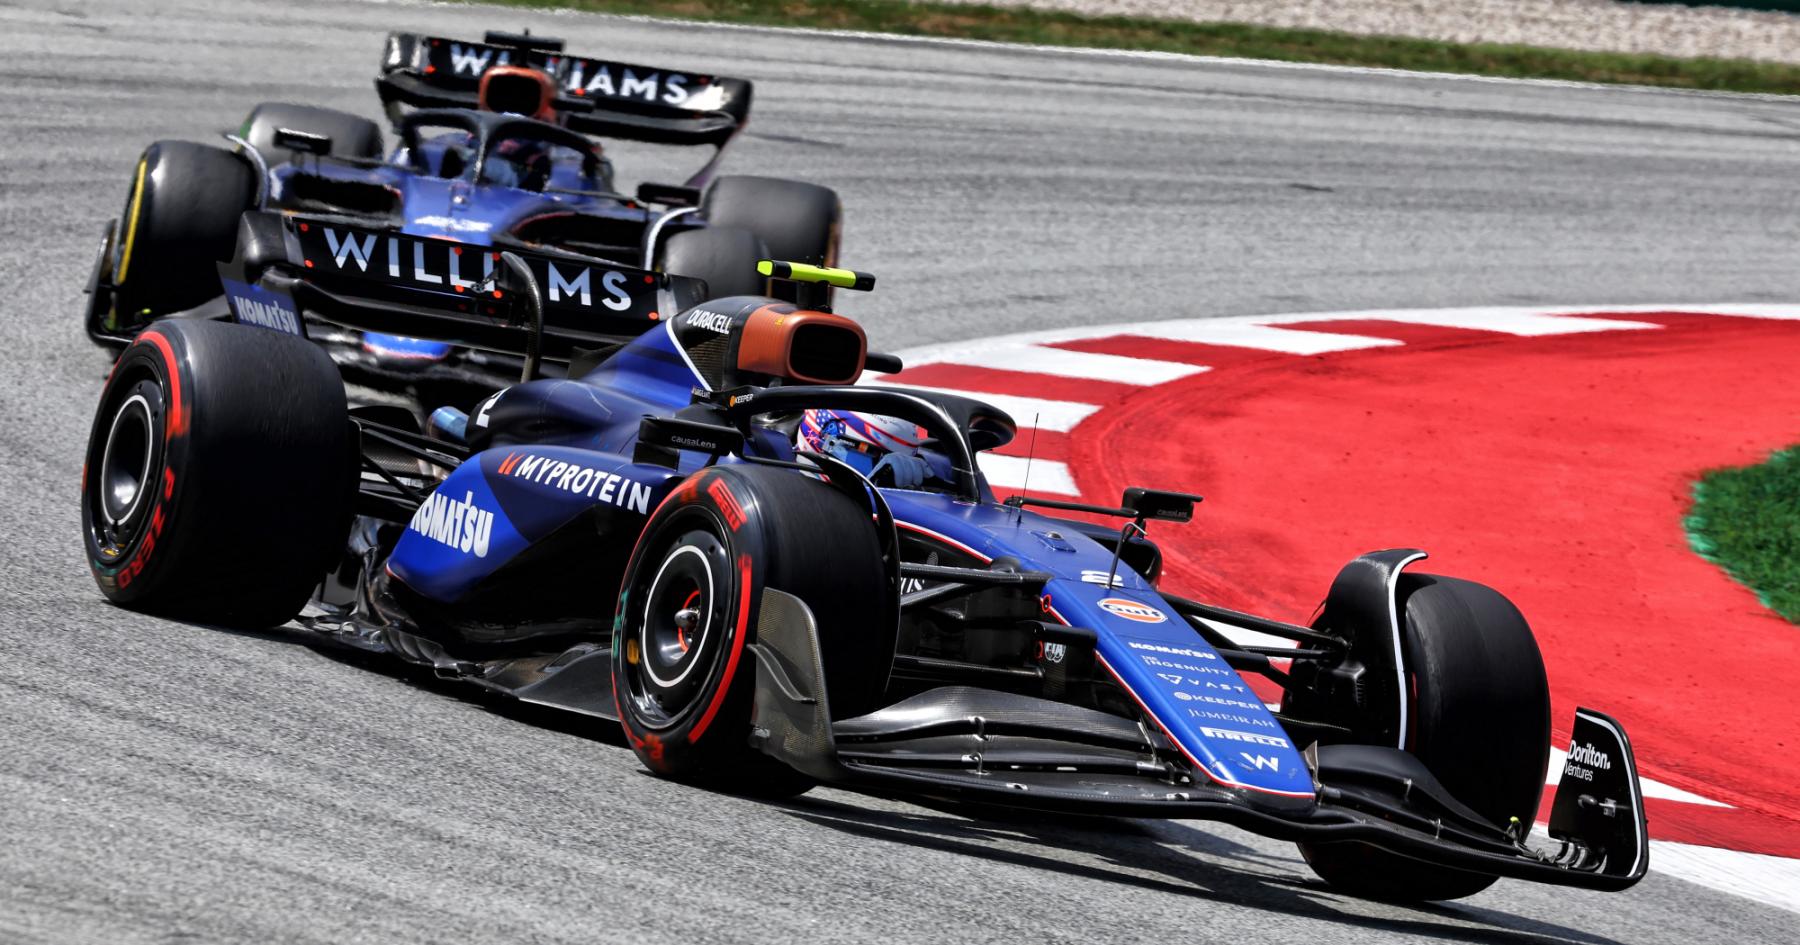 Williams Announces Replacement Driver for British Grand Prix